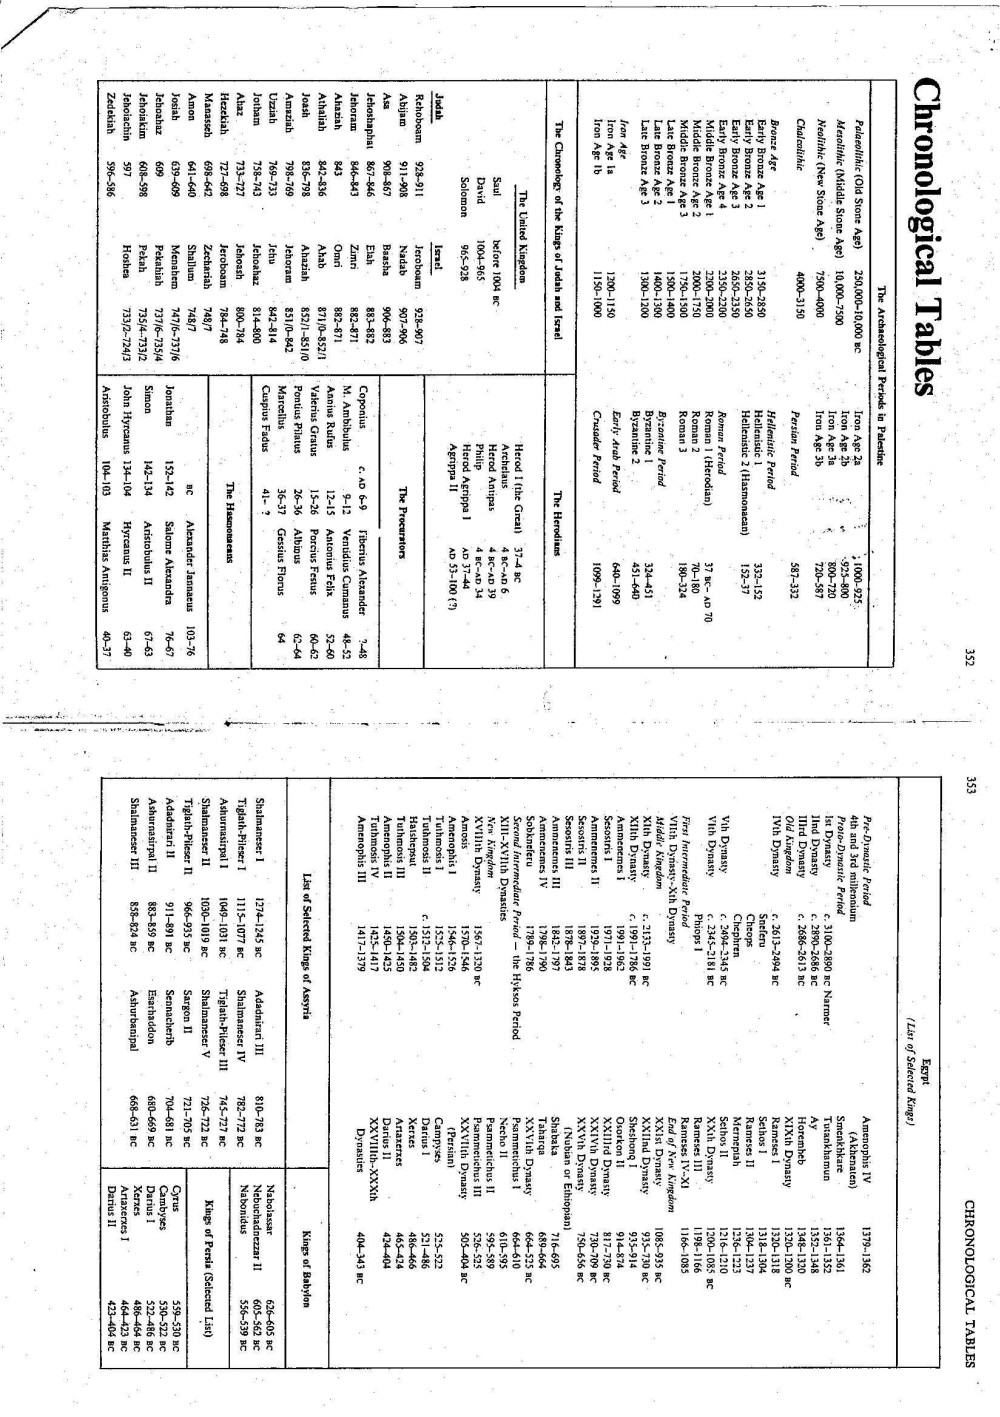 Period Tables of Chronology (3)b.jpg